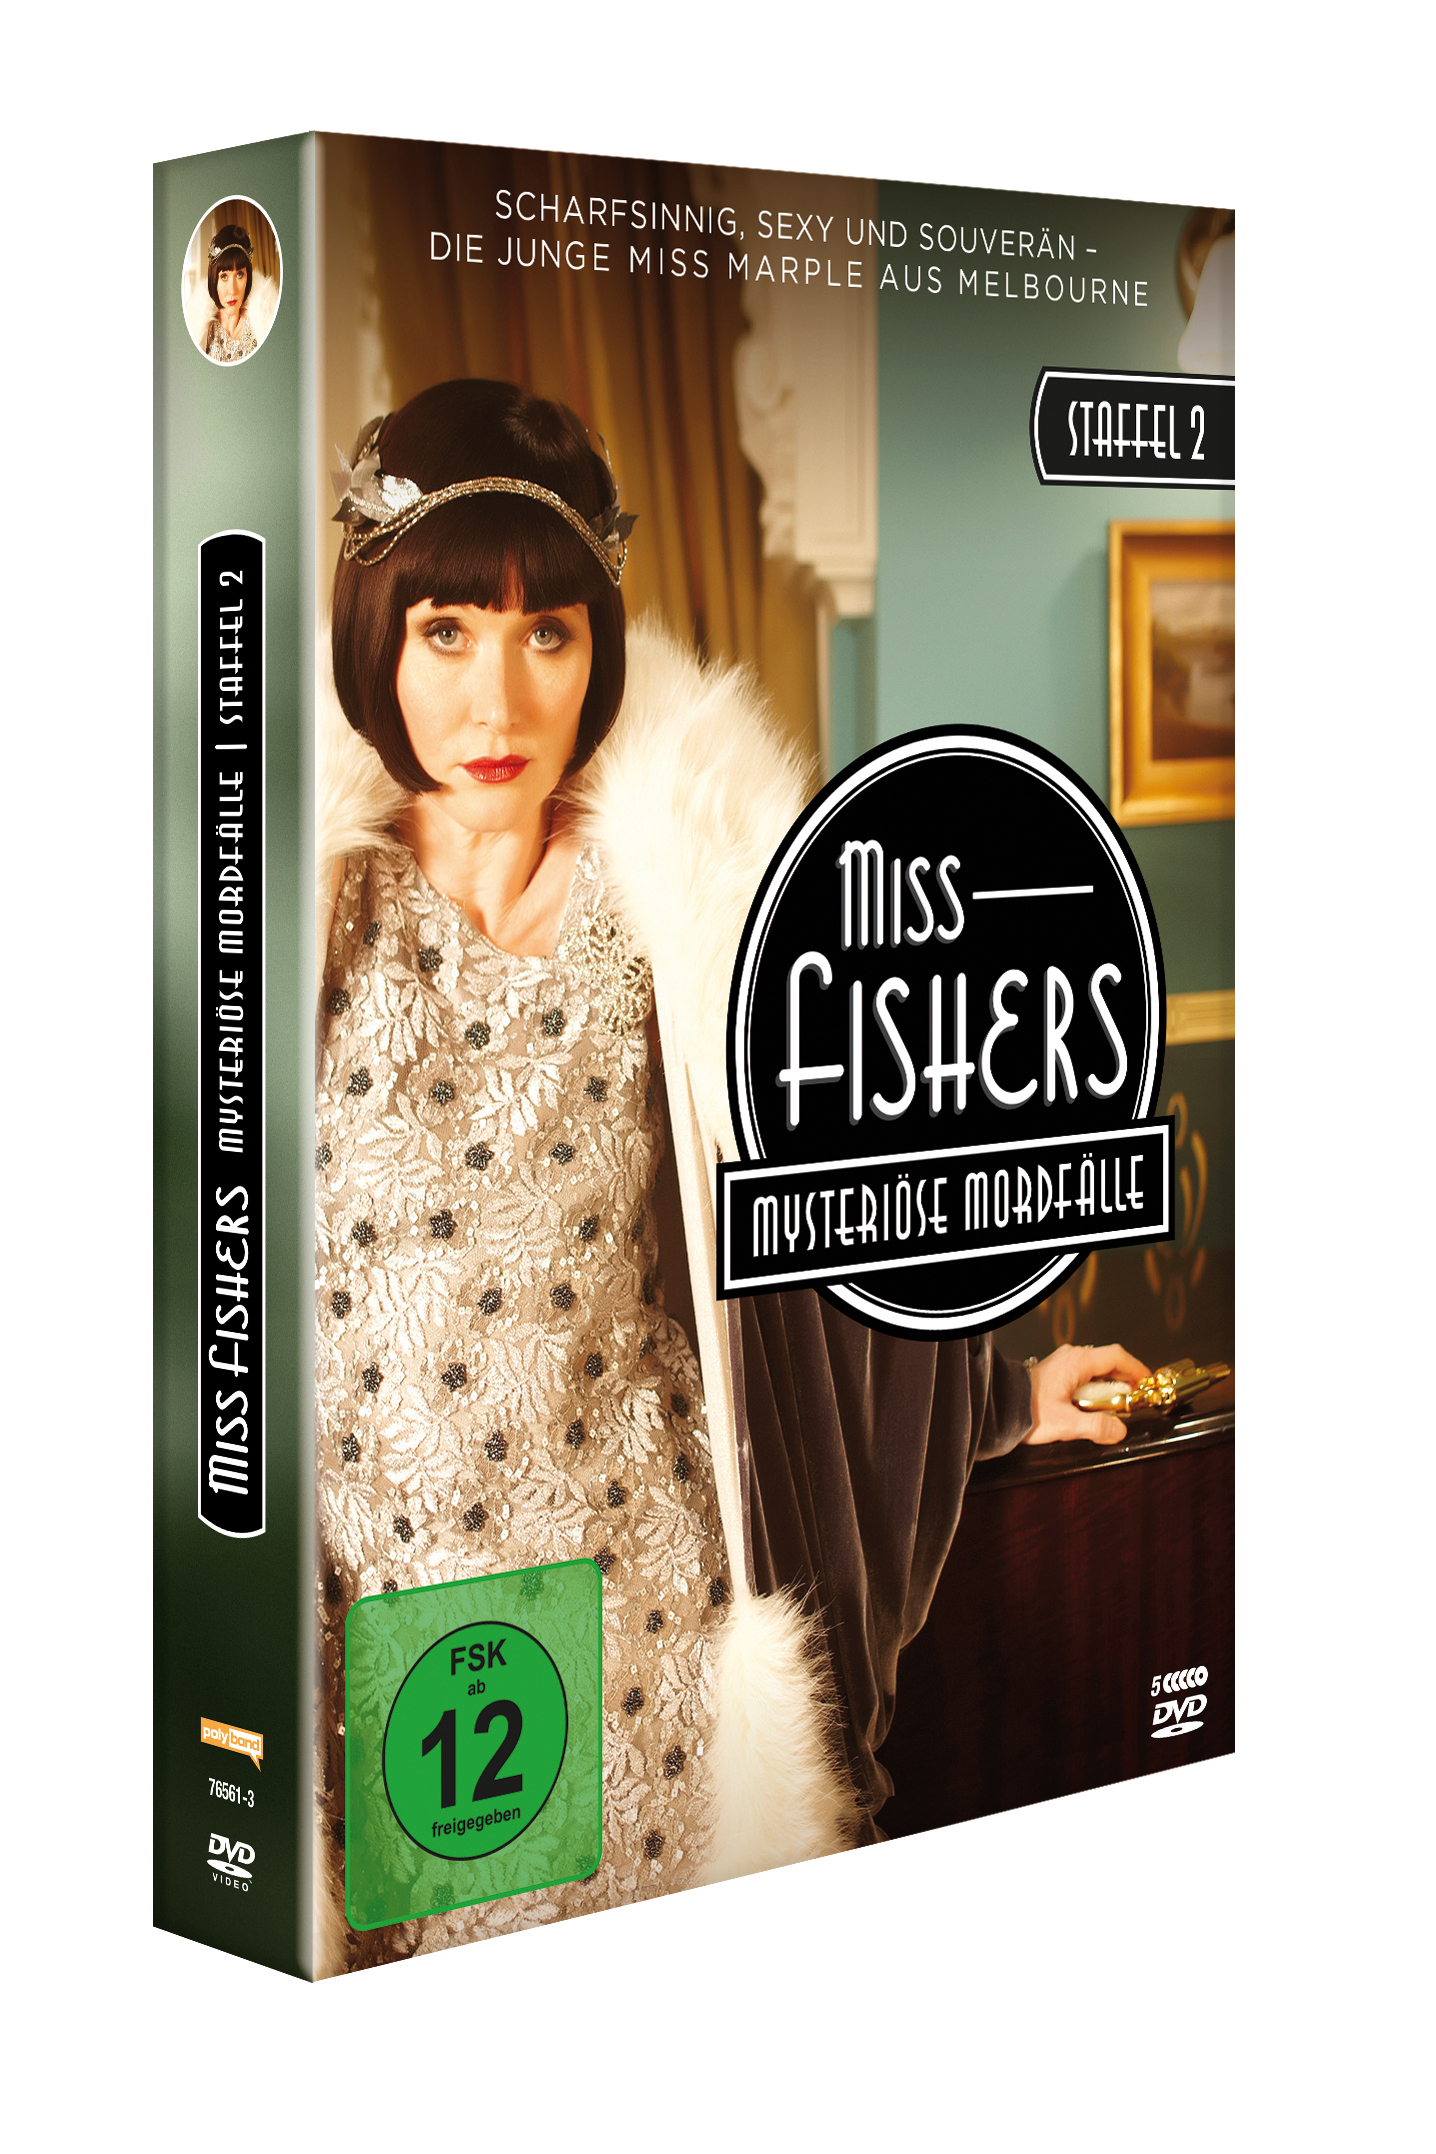 Miss Fishers - DVD Mordfälle 2 mysteriöse Staffel